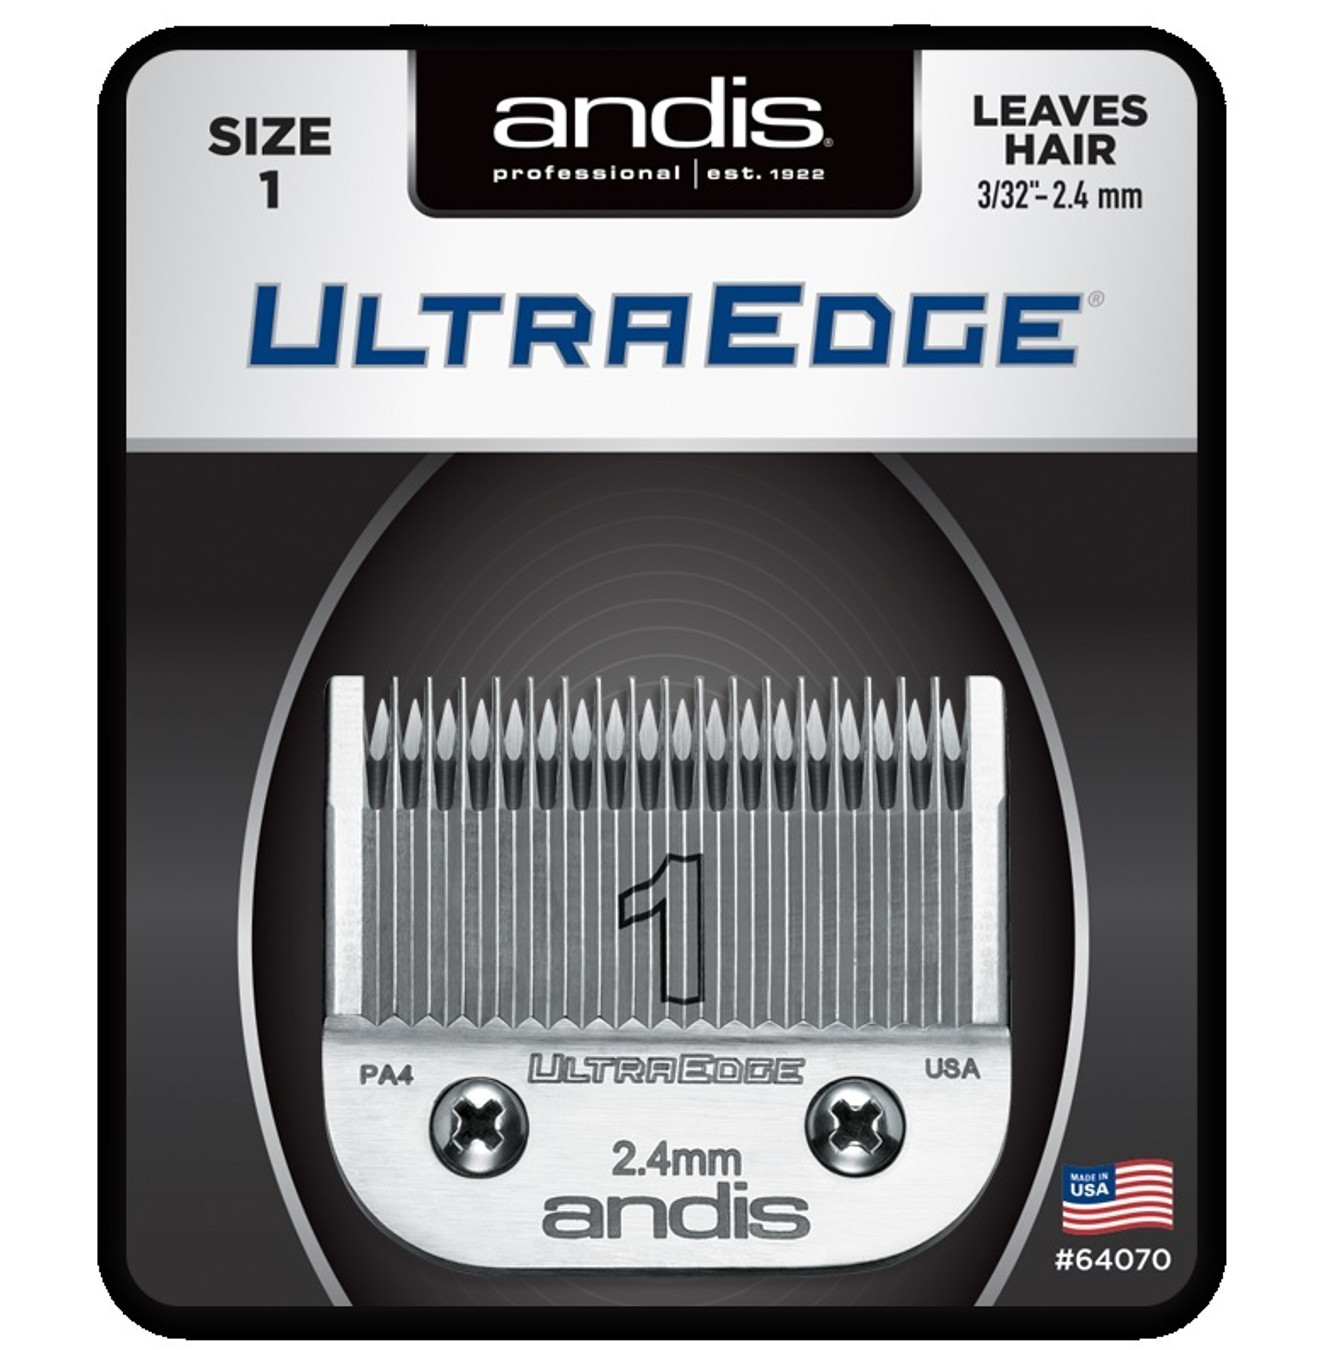 Andis Ultraedge Detachable Replacement Blade